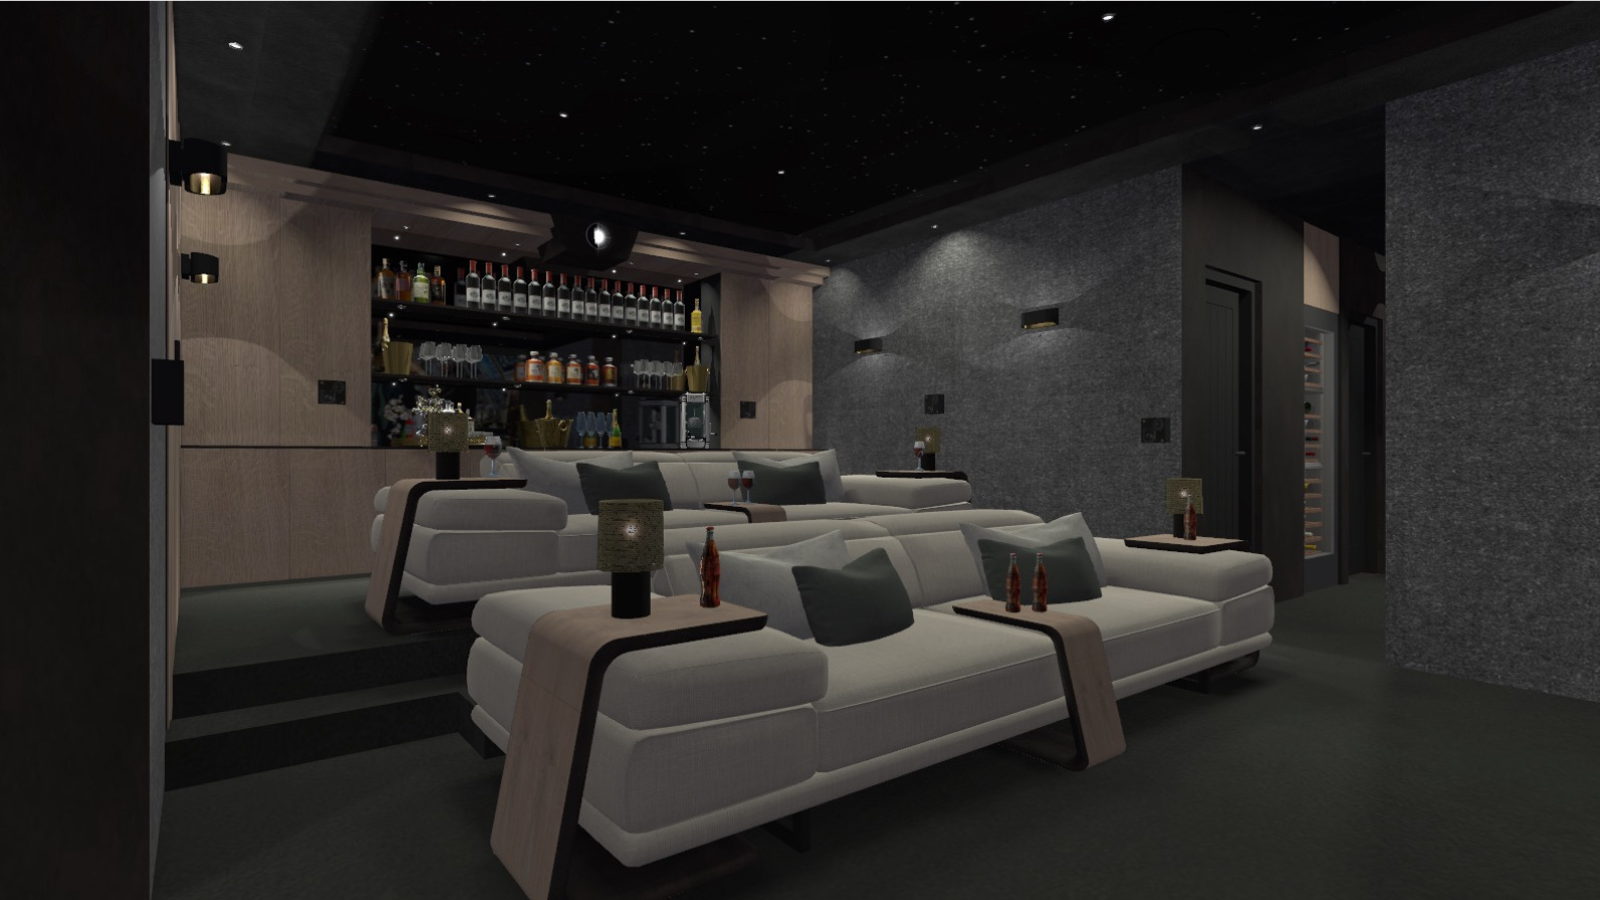 home cinema render showing cinema seating and bar